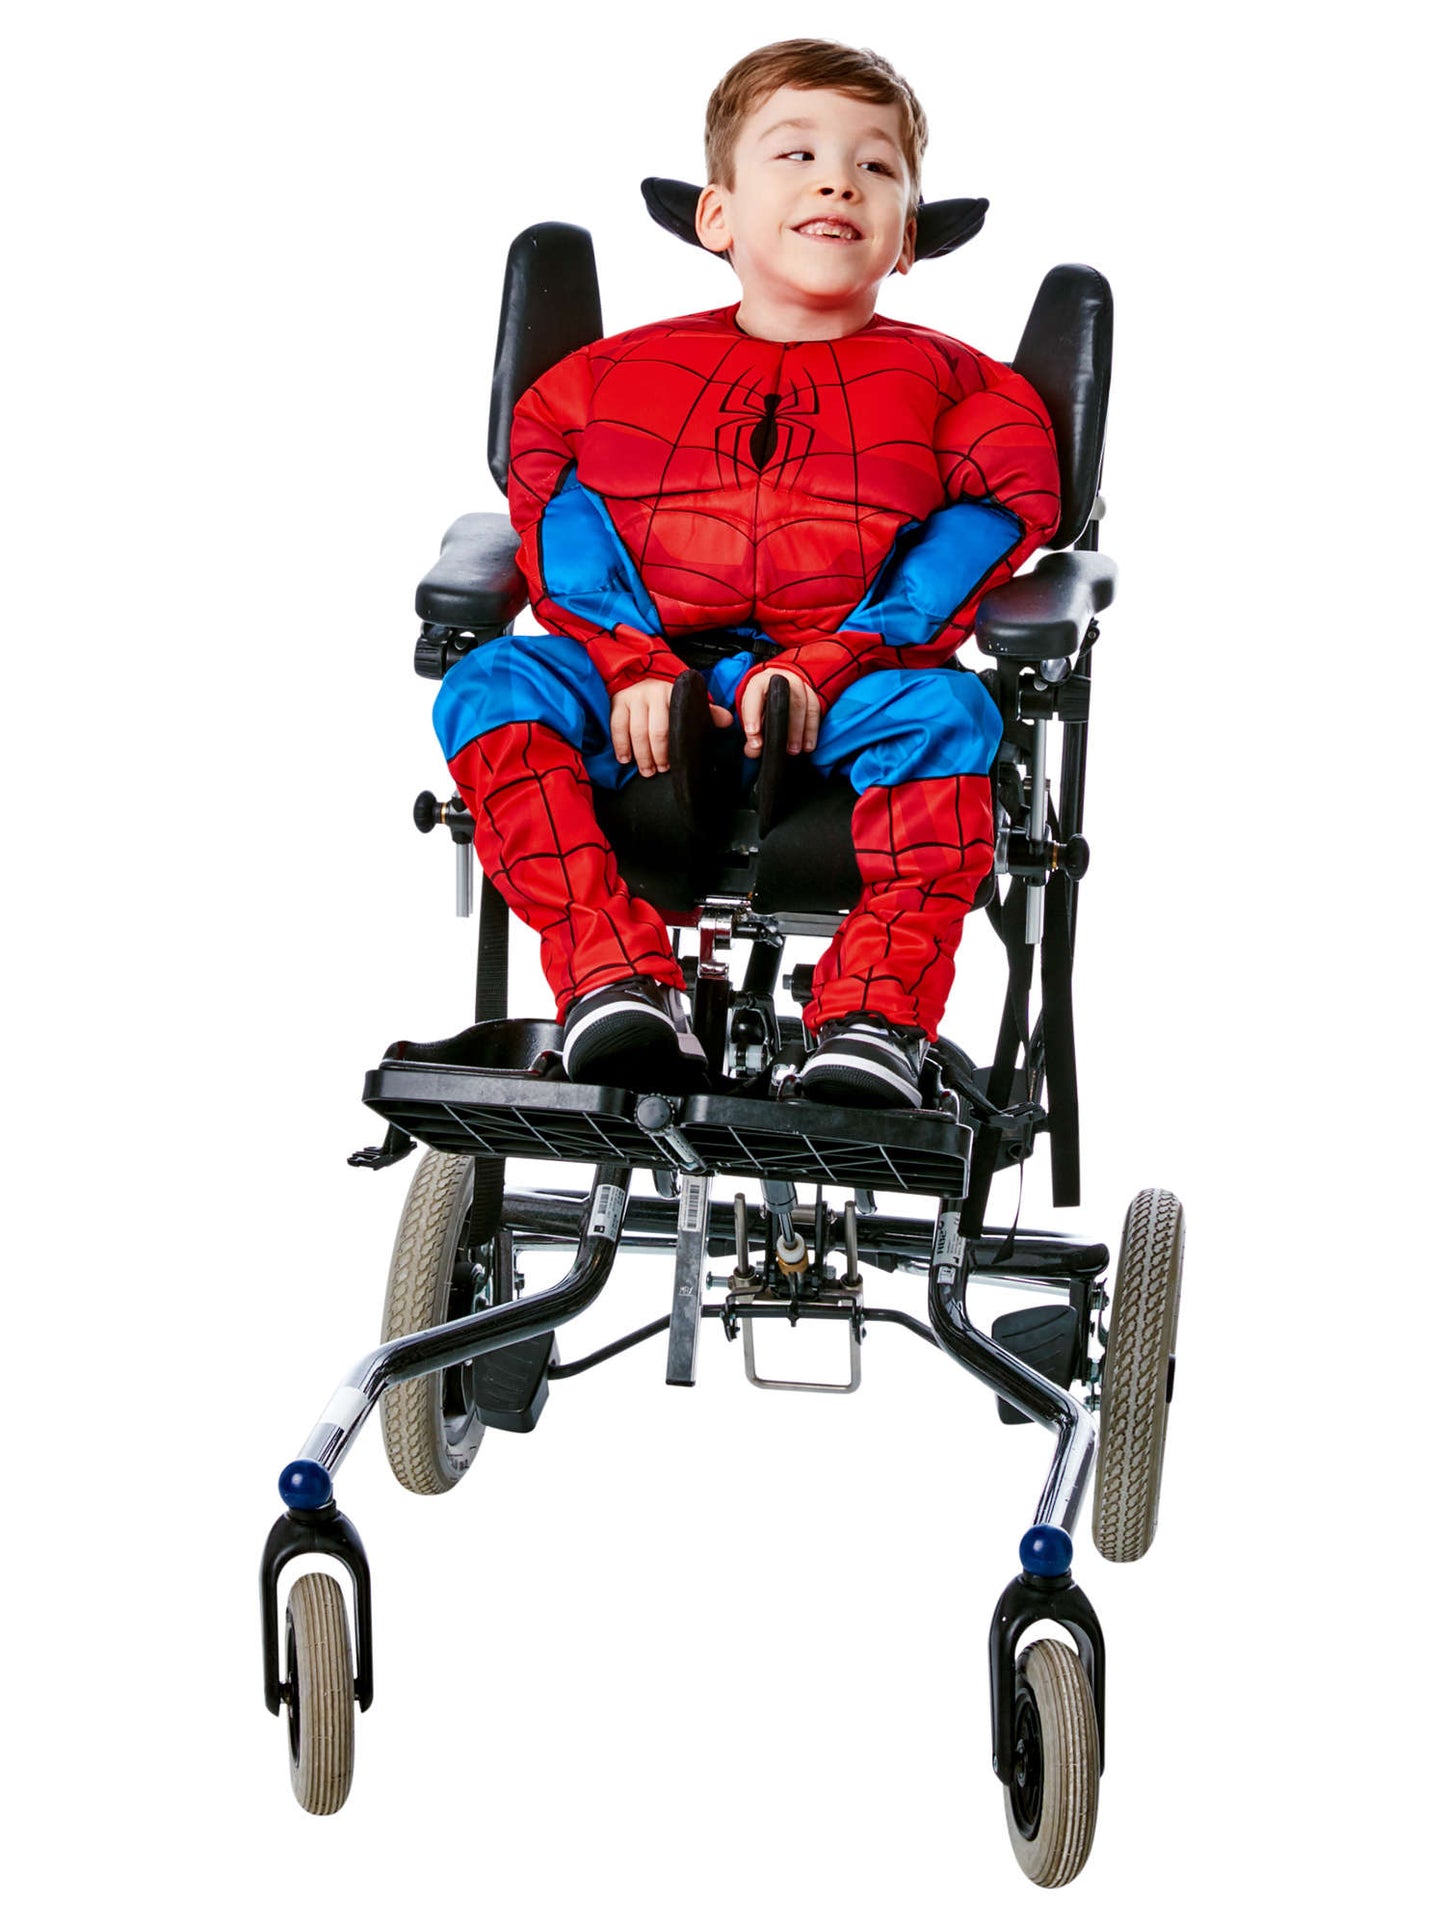 Spider-Man Adaptive Costume